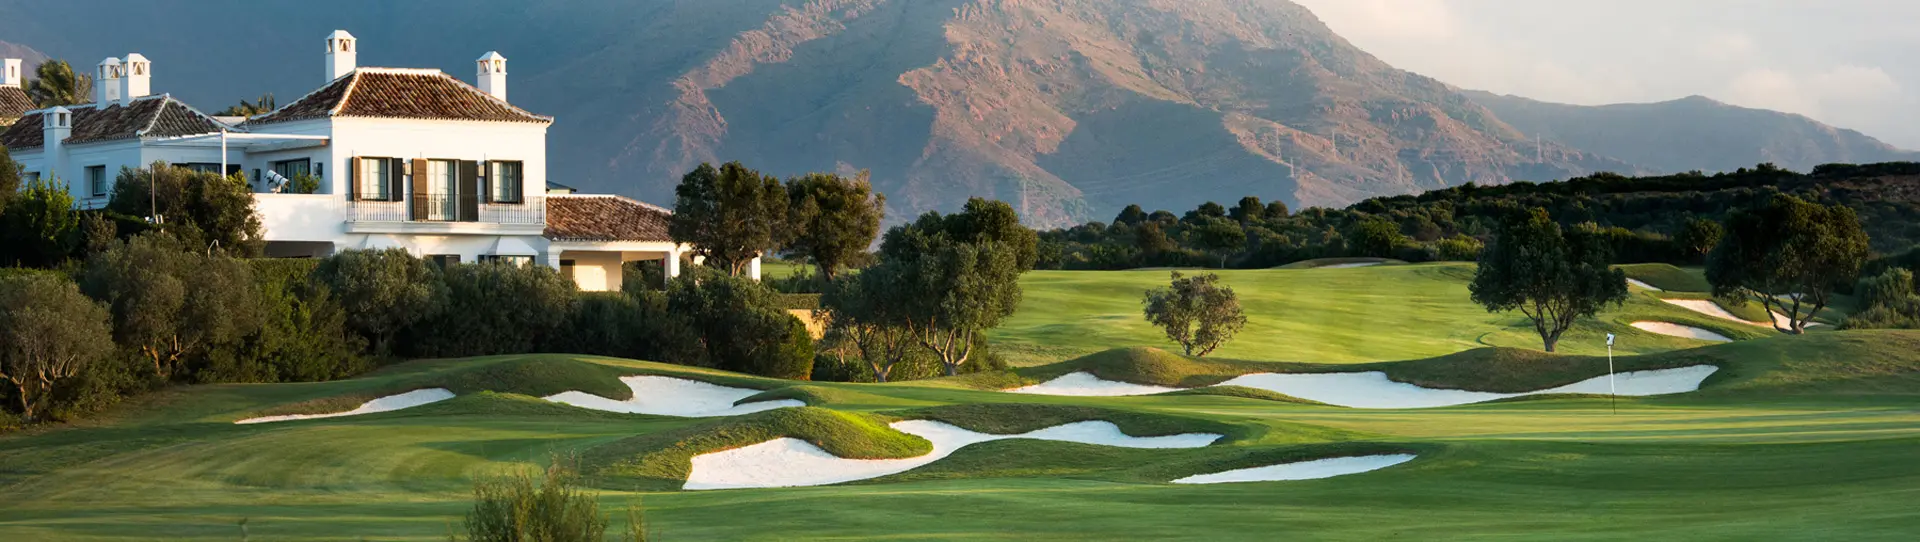 Spain golf holidays - Finca Cortesin Golf and Spa - Photo 1